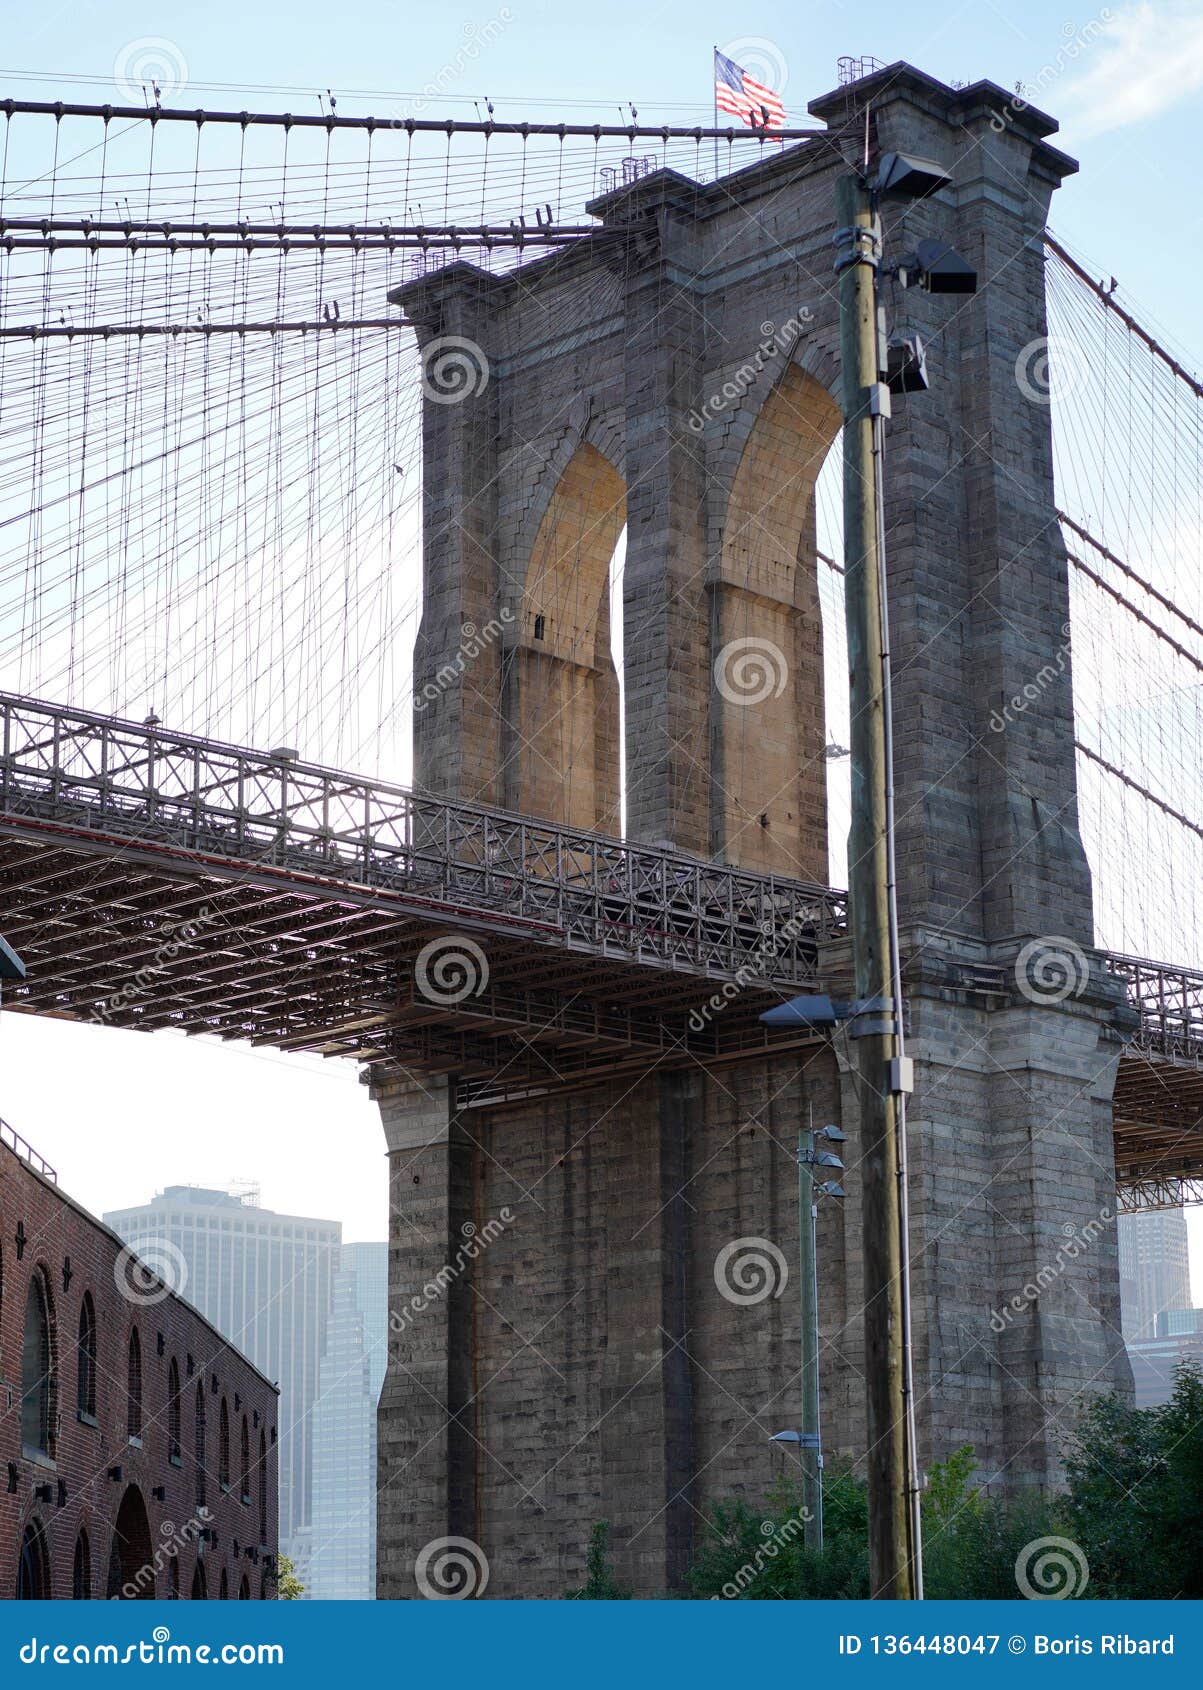 Brooklyn Bridge with Sunset Light Stock Image - Image of history ...